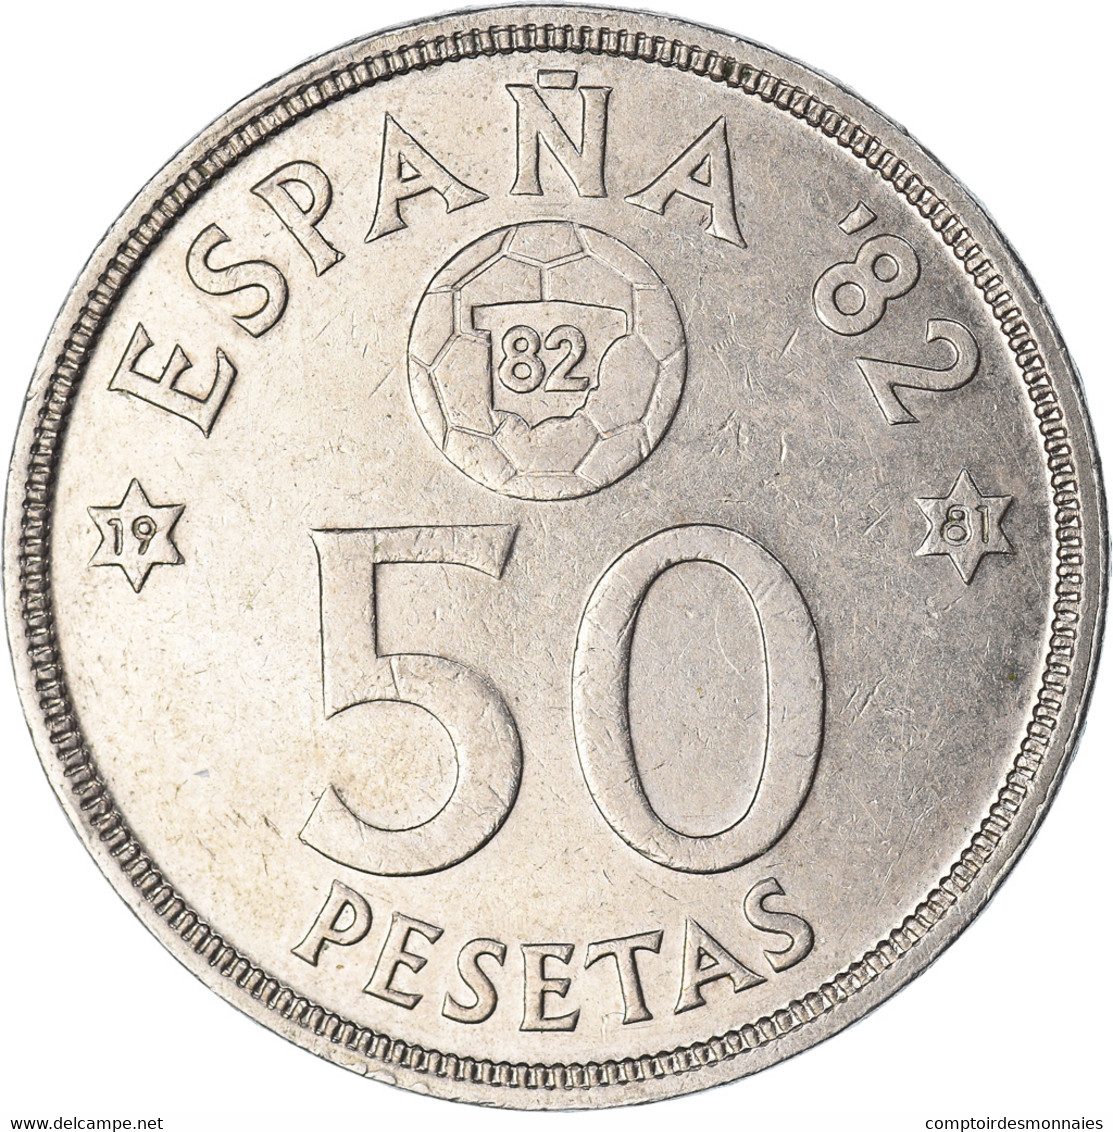 Monnaie, Espagne, 50 Pesetas, 1980-81 - 50 Pesetas